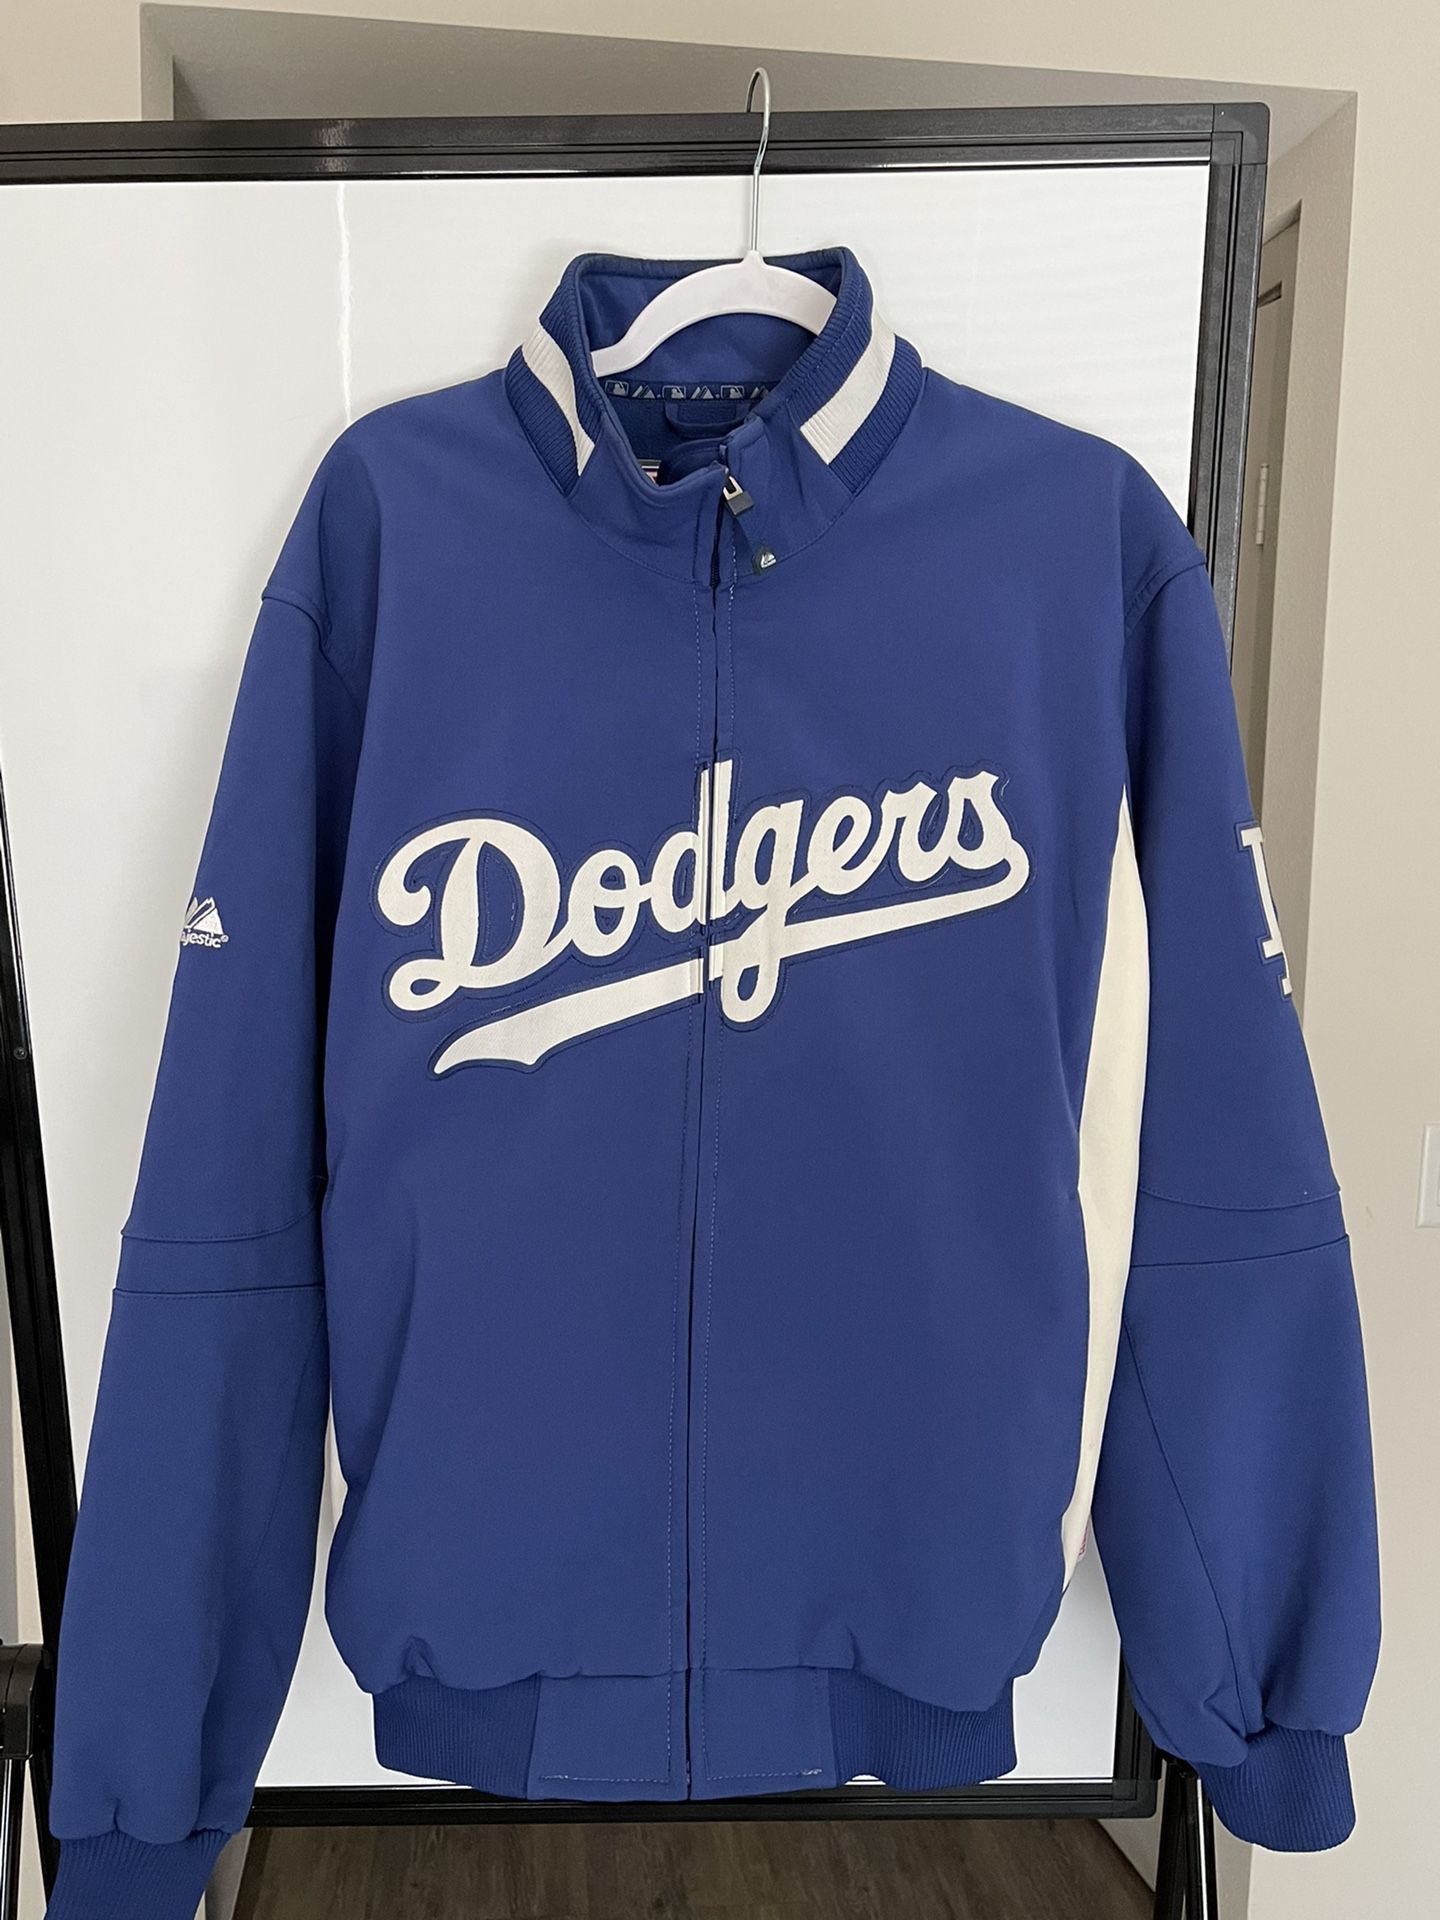 Dodgers Jacket for Sale in Montclair, CA - OfferUp